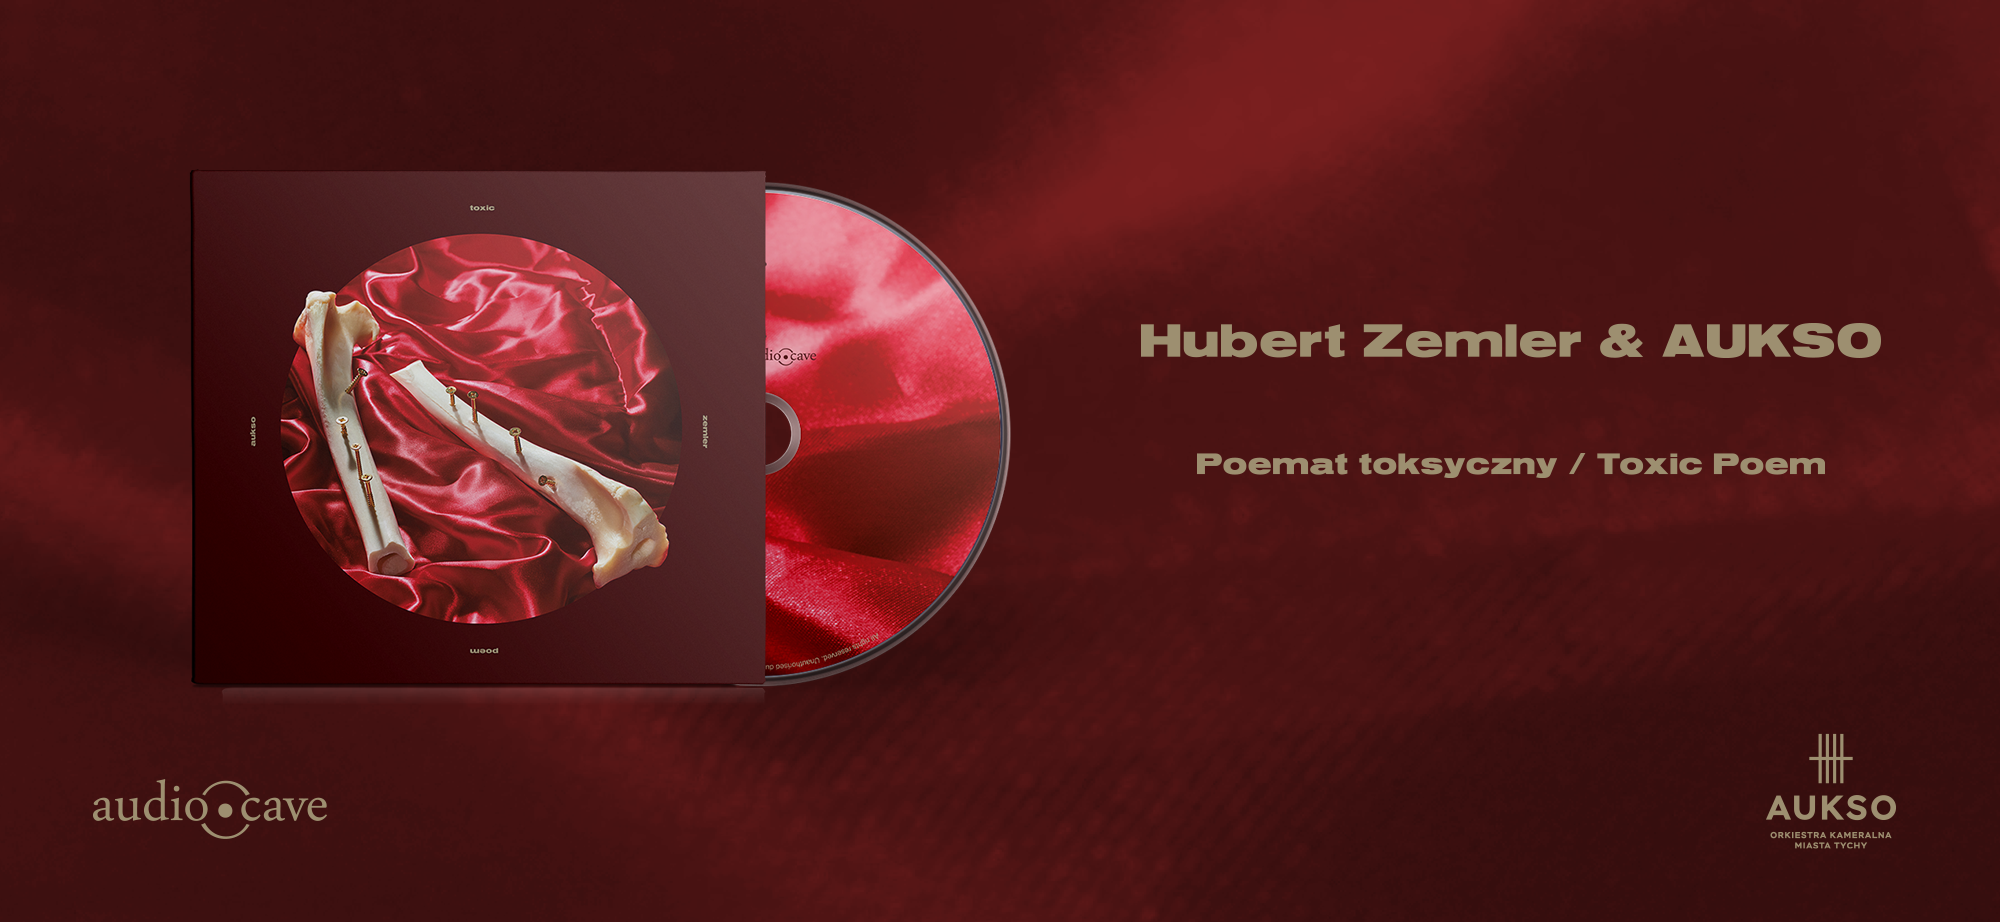 Hubert Zemler & AUKSO - Poemat toksyczny CD